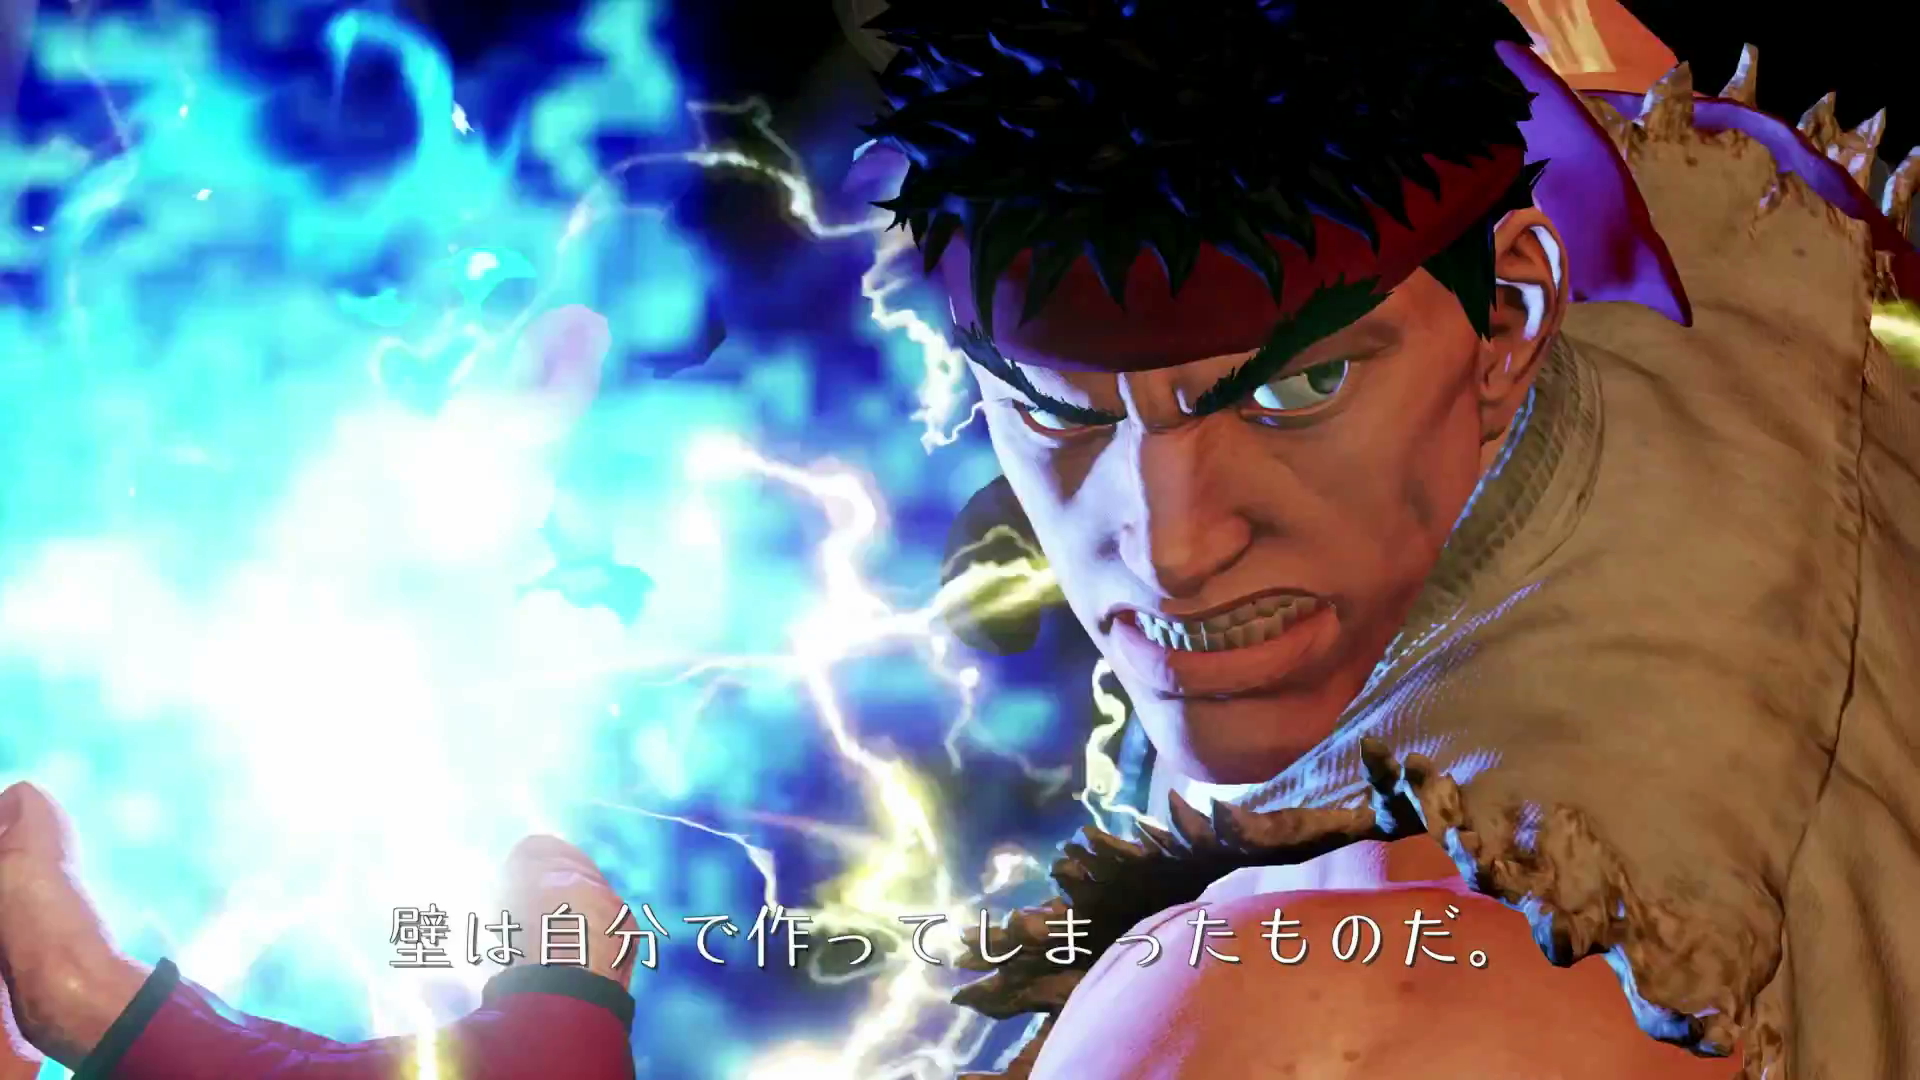 Ryu Hadouken Street Fighter 2, street-fighter-v, games, 2016-games